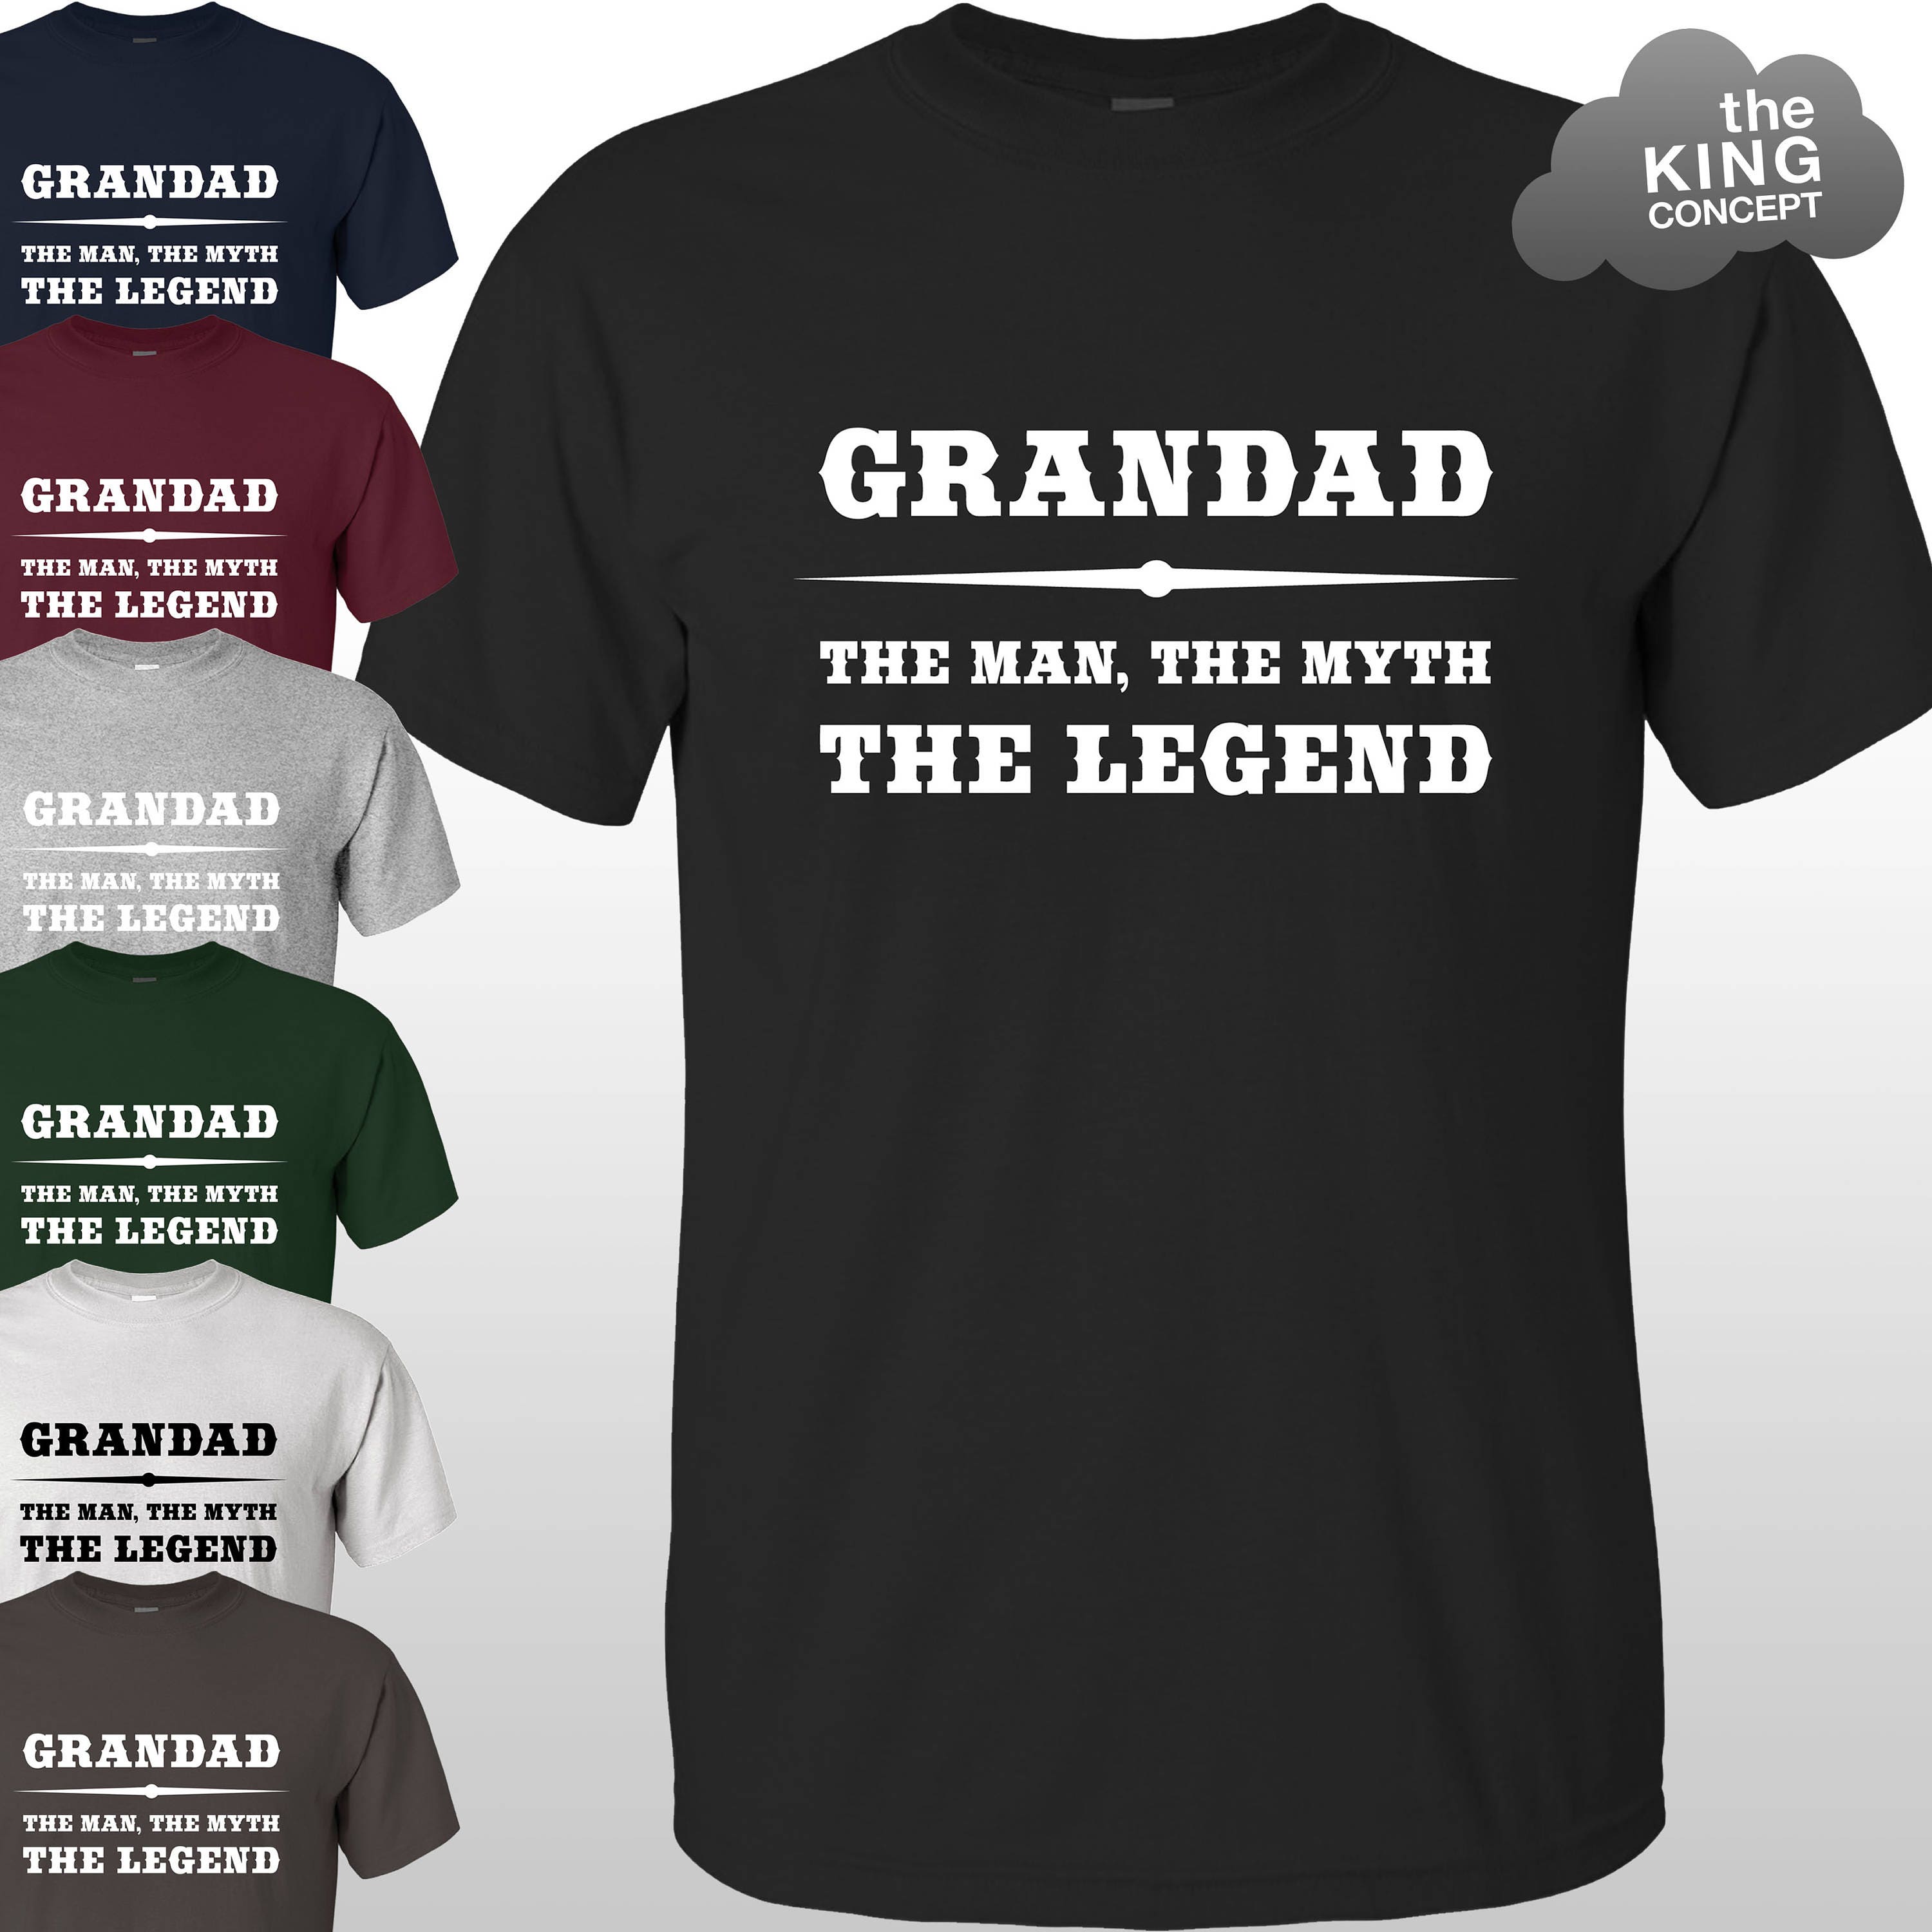 Grandad The Man Myth Legend T-Shirt Top Tee Christmas Fathers Day Gift Mens Dad Daddy Fan